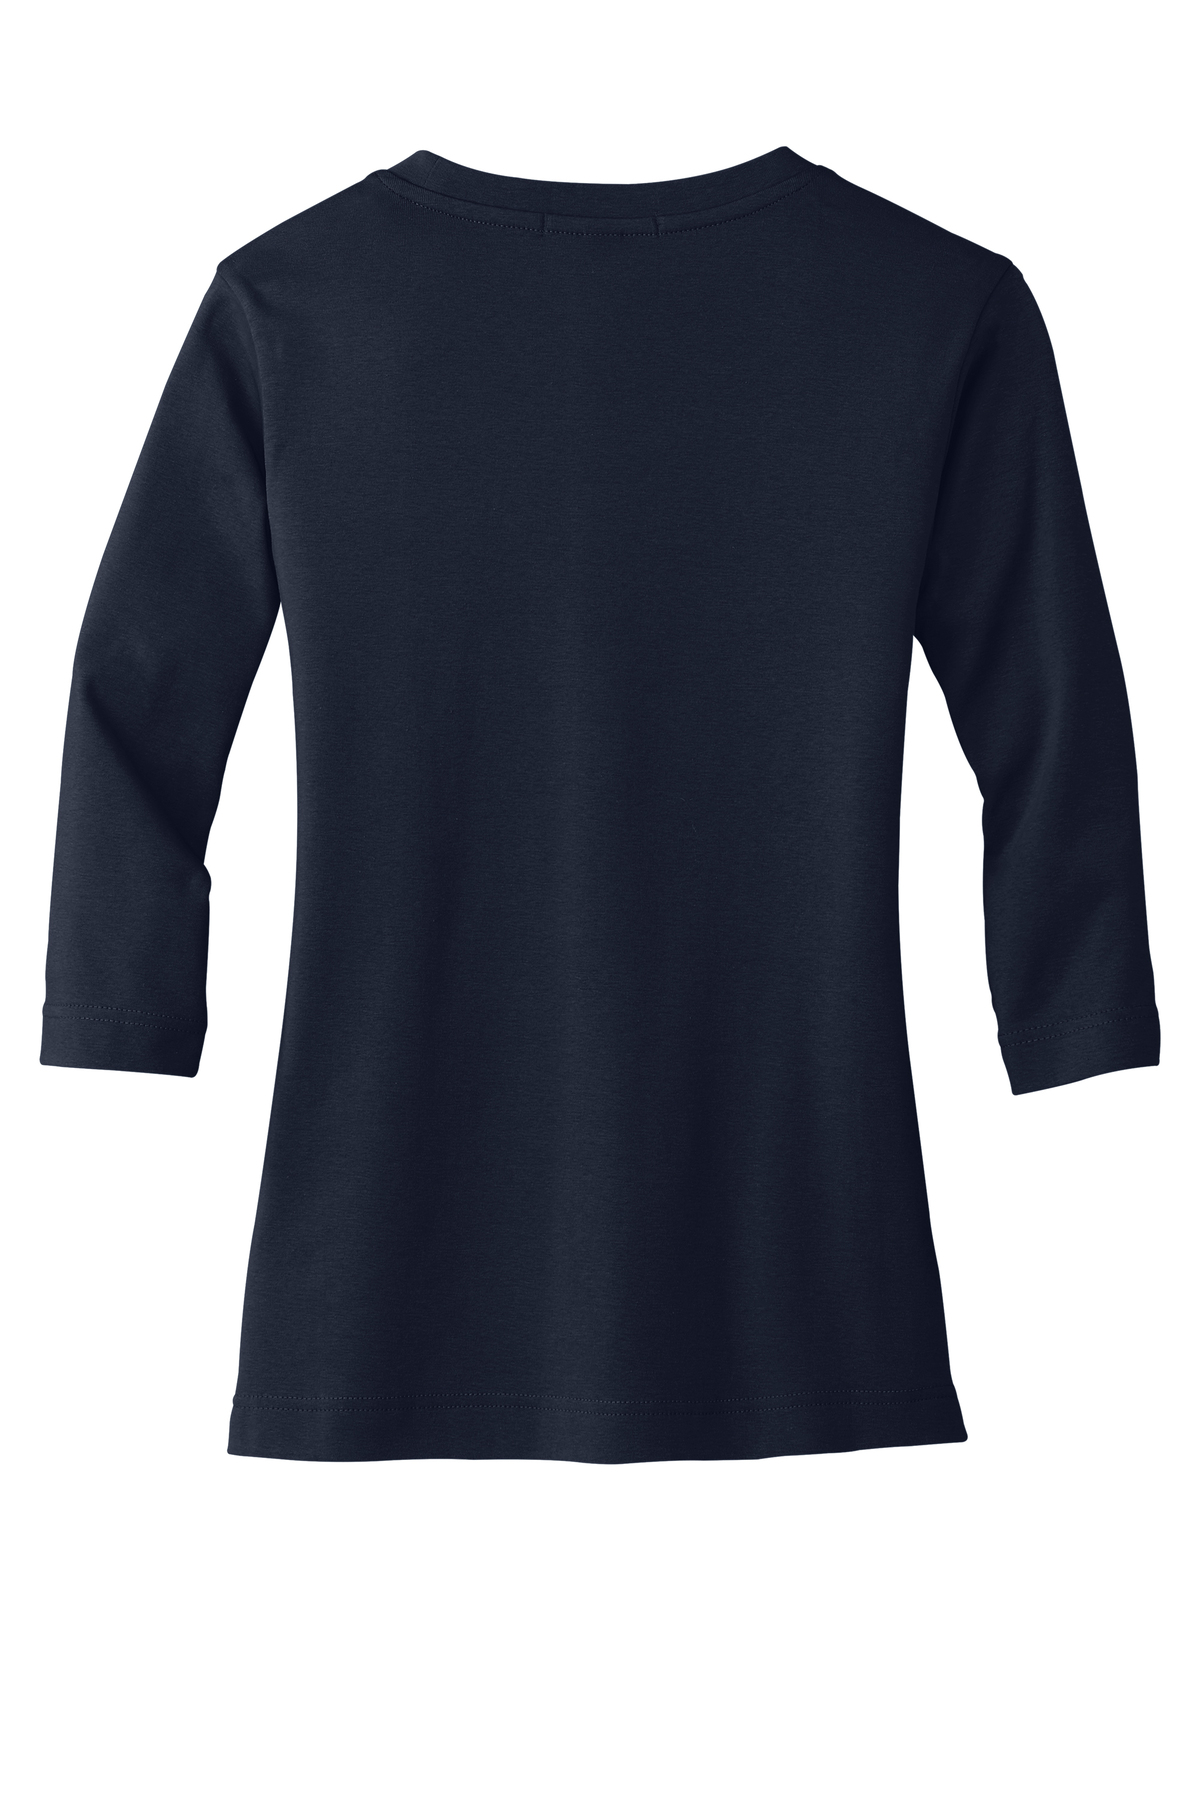 ASEIDFNSA Edgy Clothes for Women Long Women T Shirt Short Color